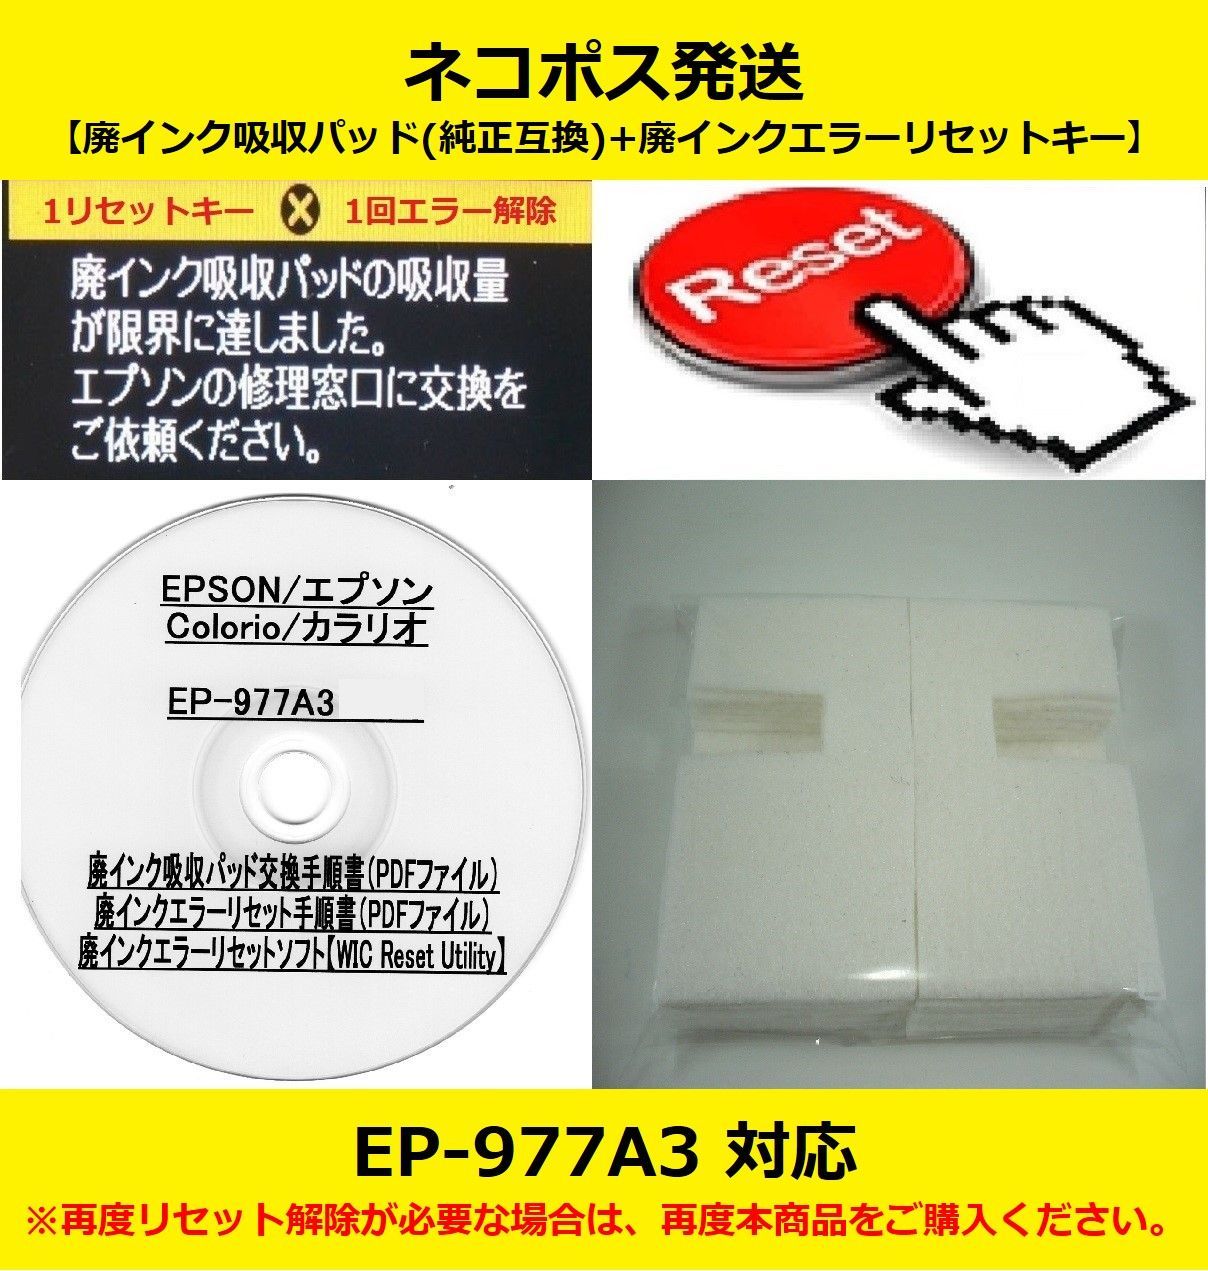 EP-977A3 EPSON/エプソン ♪安心の日本製吸収材♪ 【廃インク吸収